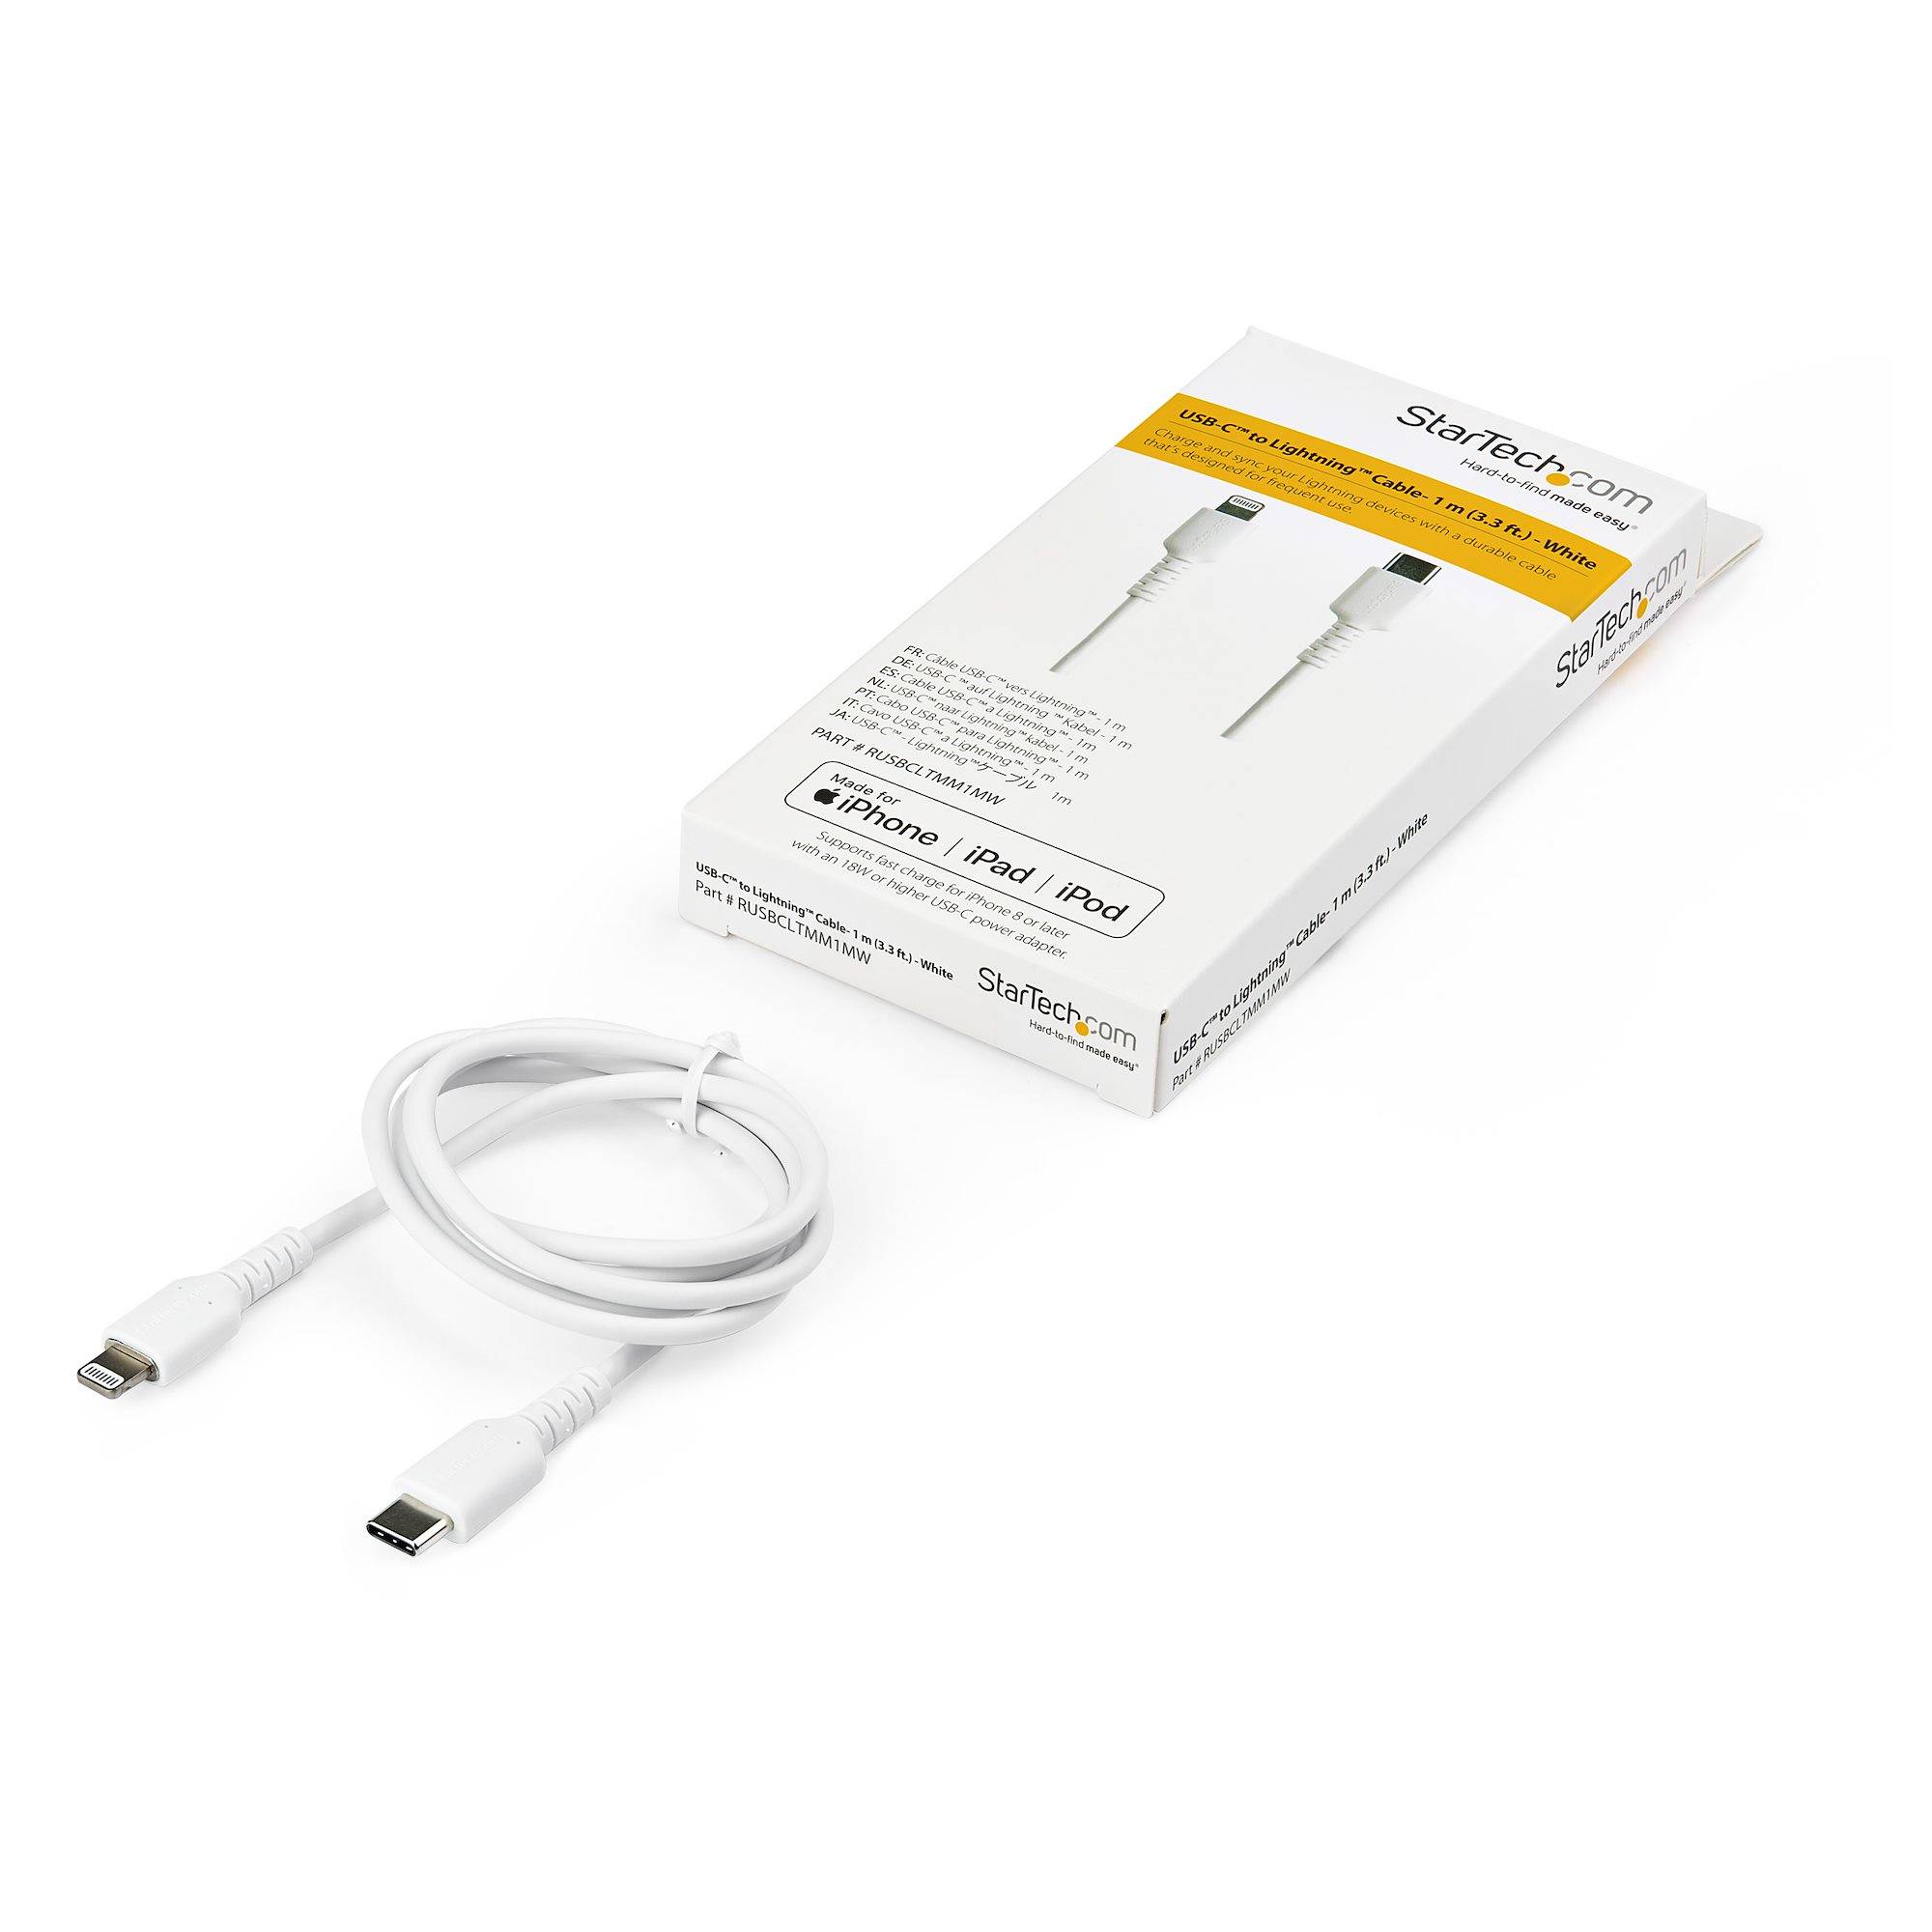 Rca Informatique - image du produit : 1M USB C TO LIGHTNING CABLE WHITE - ARAMID FIBER